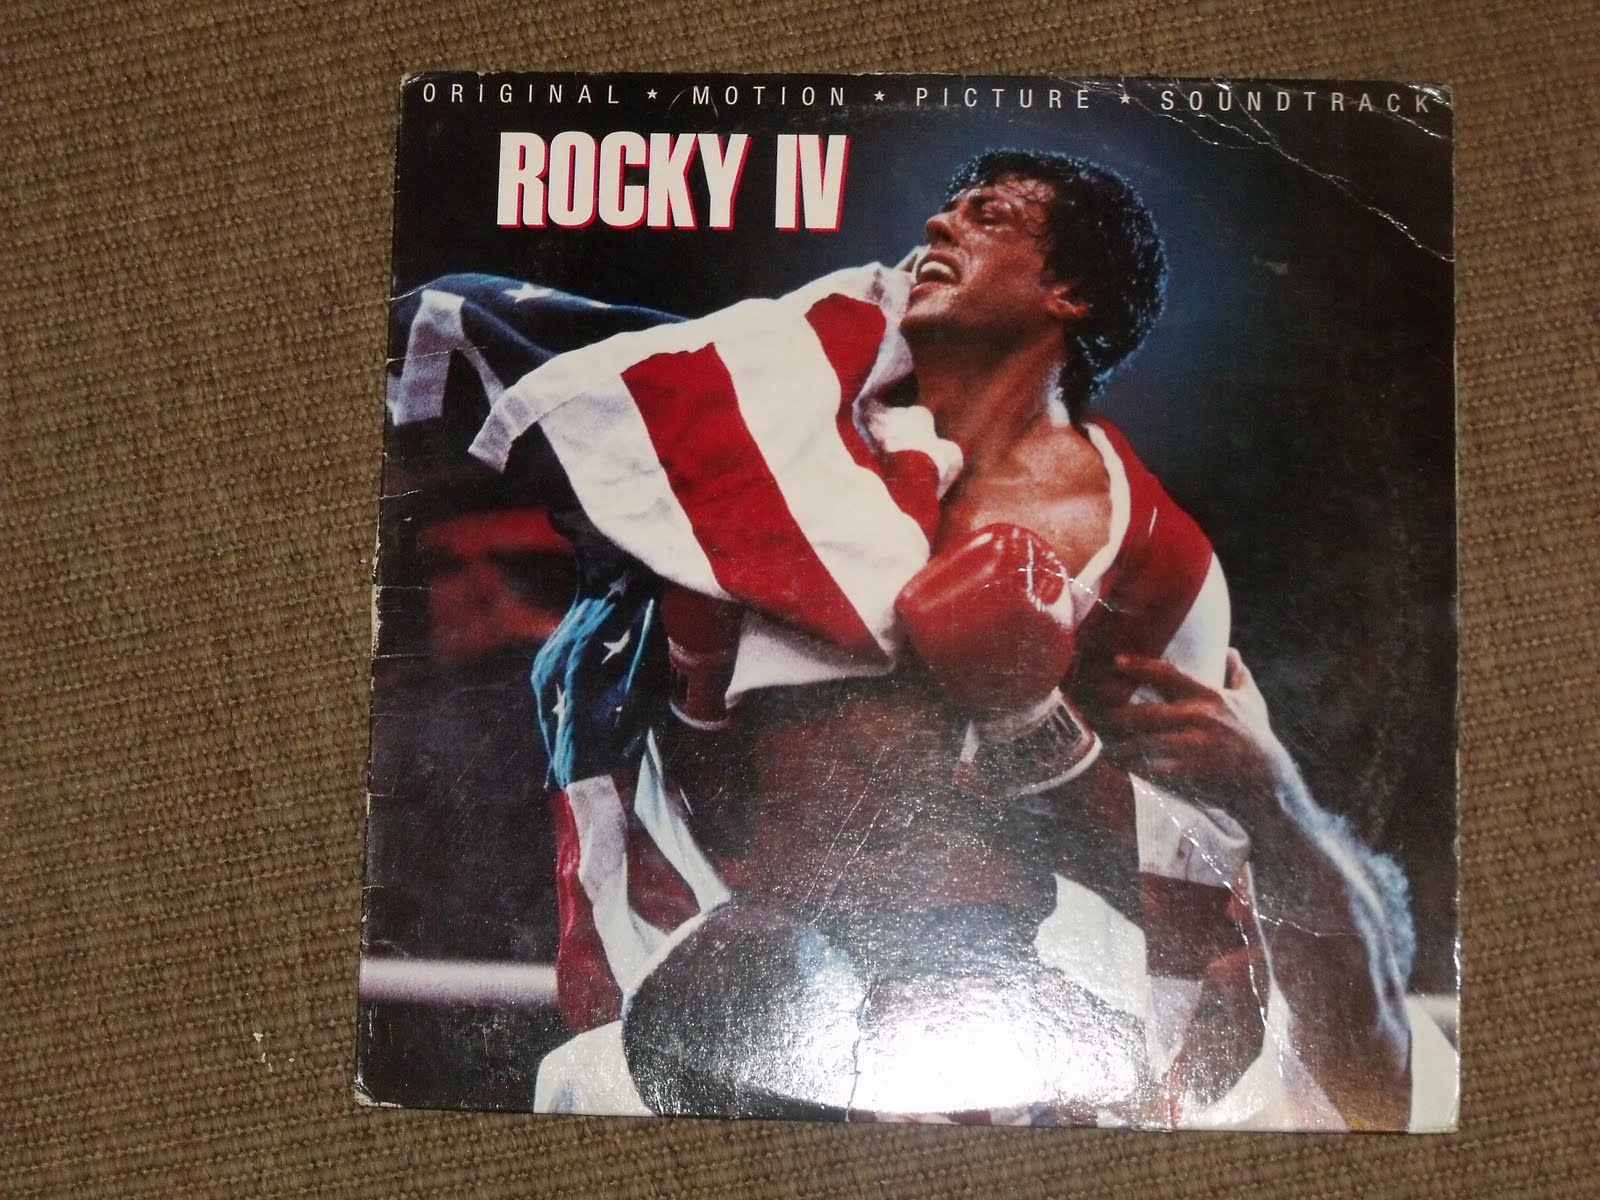 Рокки 4 музыка. Rocky OST LP 45. Rocky IV - Original Motion picture Soundtrack. Vince Dicola - only time will tell - 2021. Soundtrack - Rocky IV 2lp.